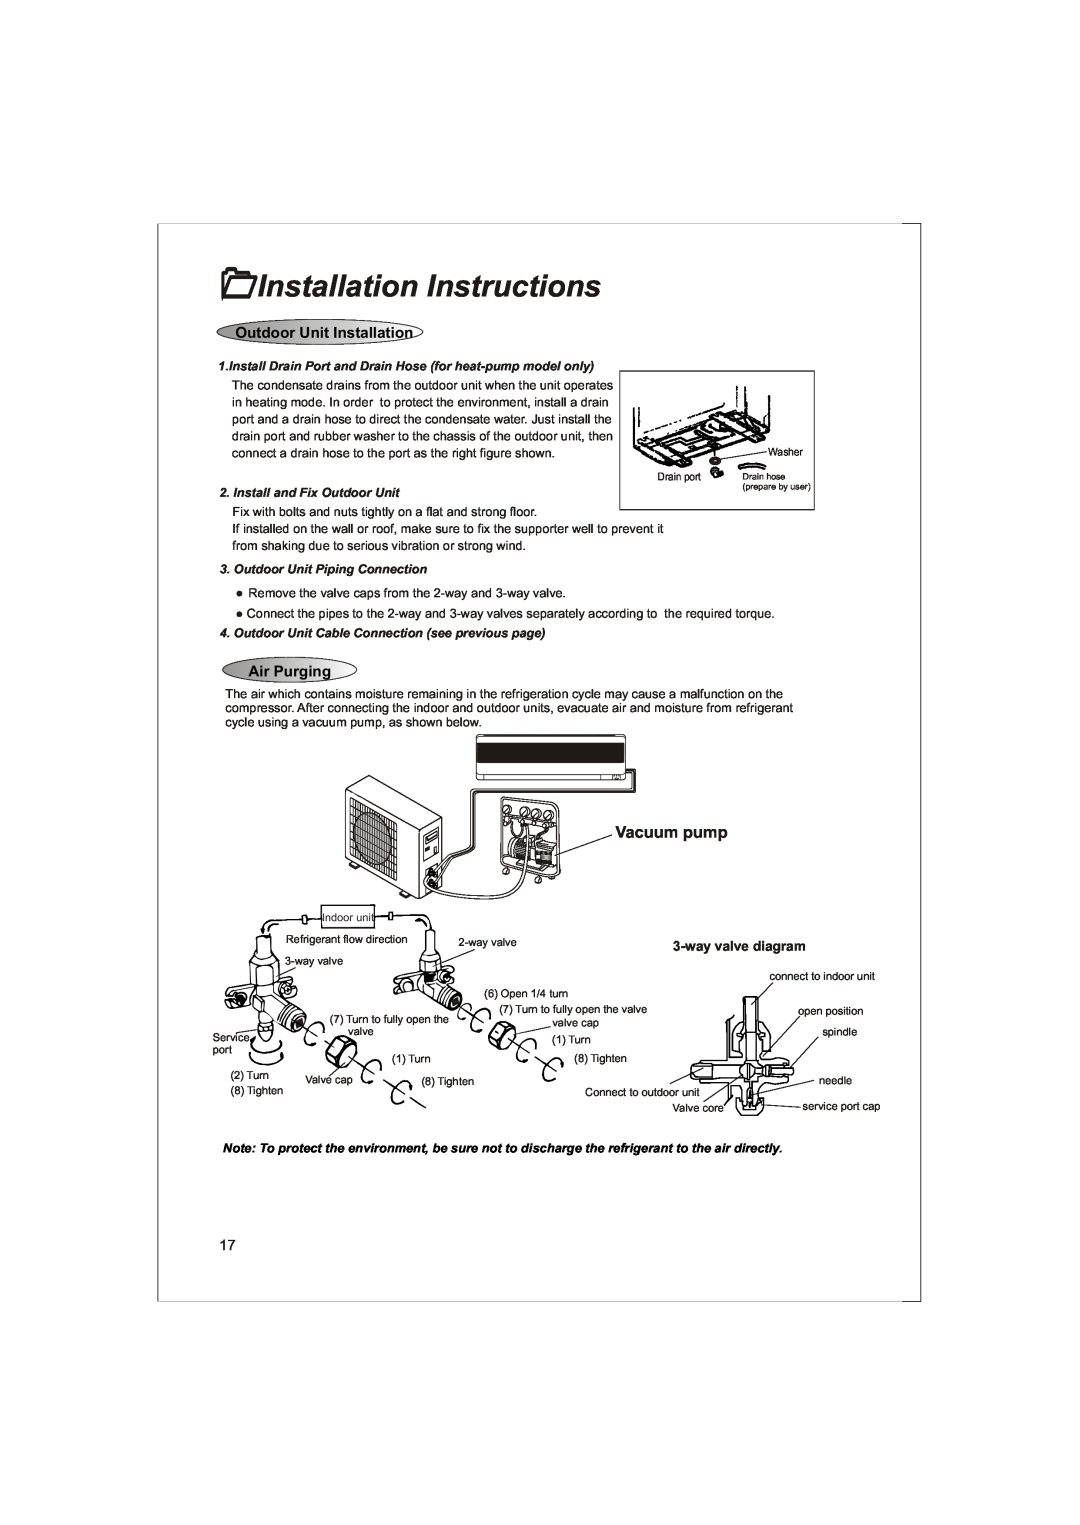 Soleus Air KFTHP-24-ID, KFTHP-18-OD 1Installation Instructions, Outdoor Unit Installation, Air Purging, wayvalve diagram 